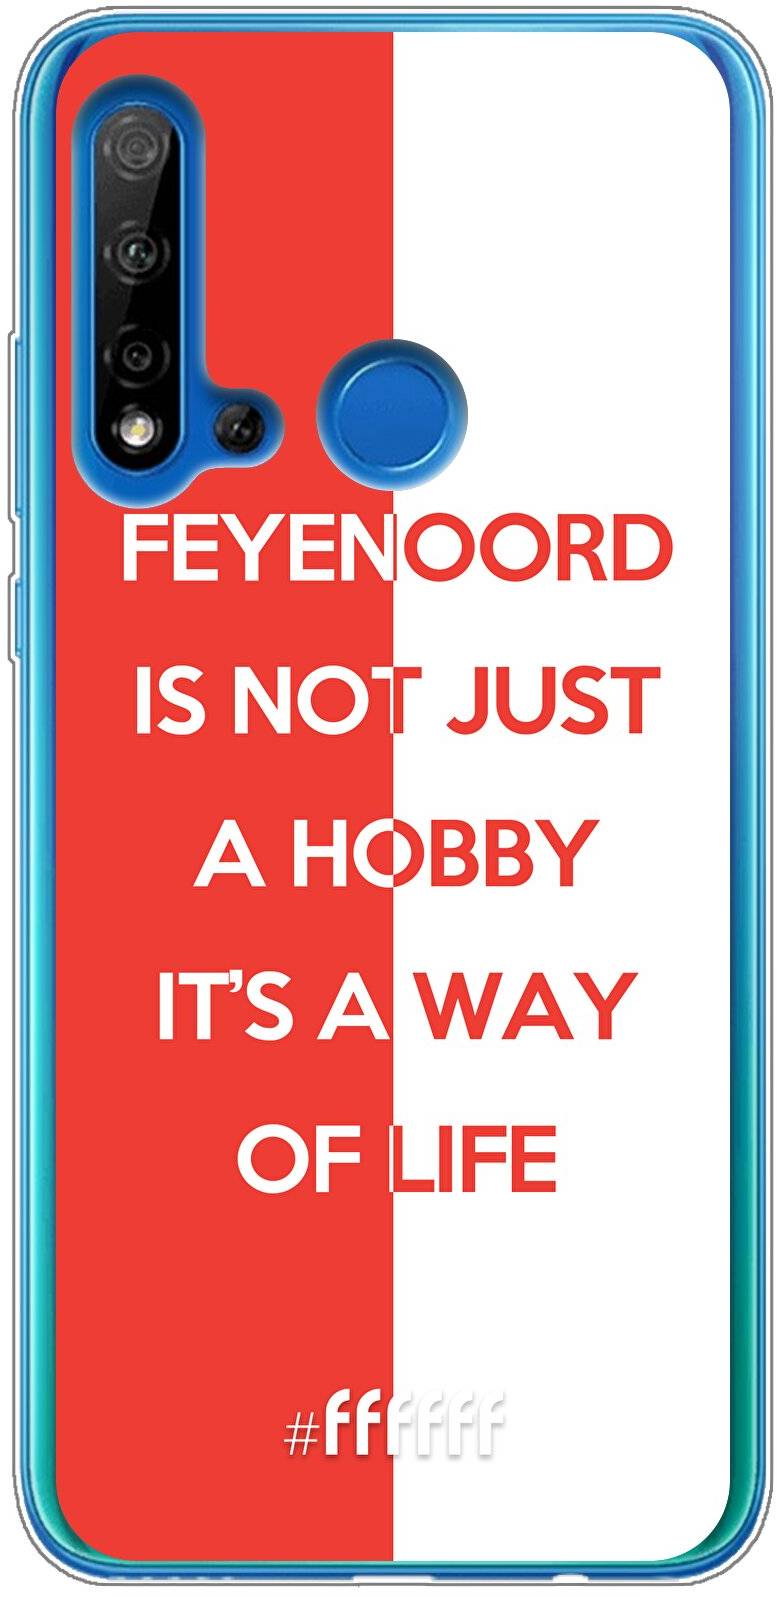 Feyenoord - Way of life P20 Lite (2019)